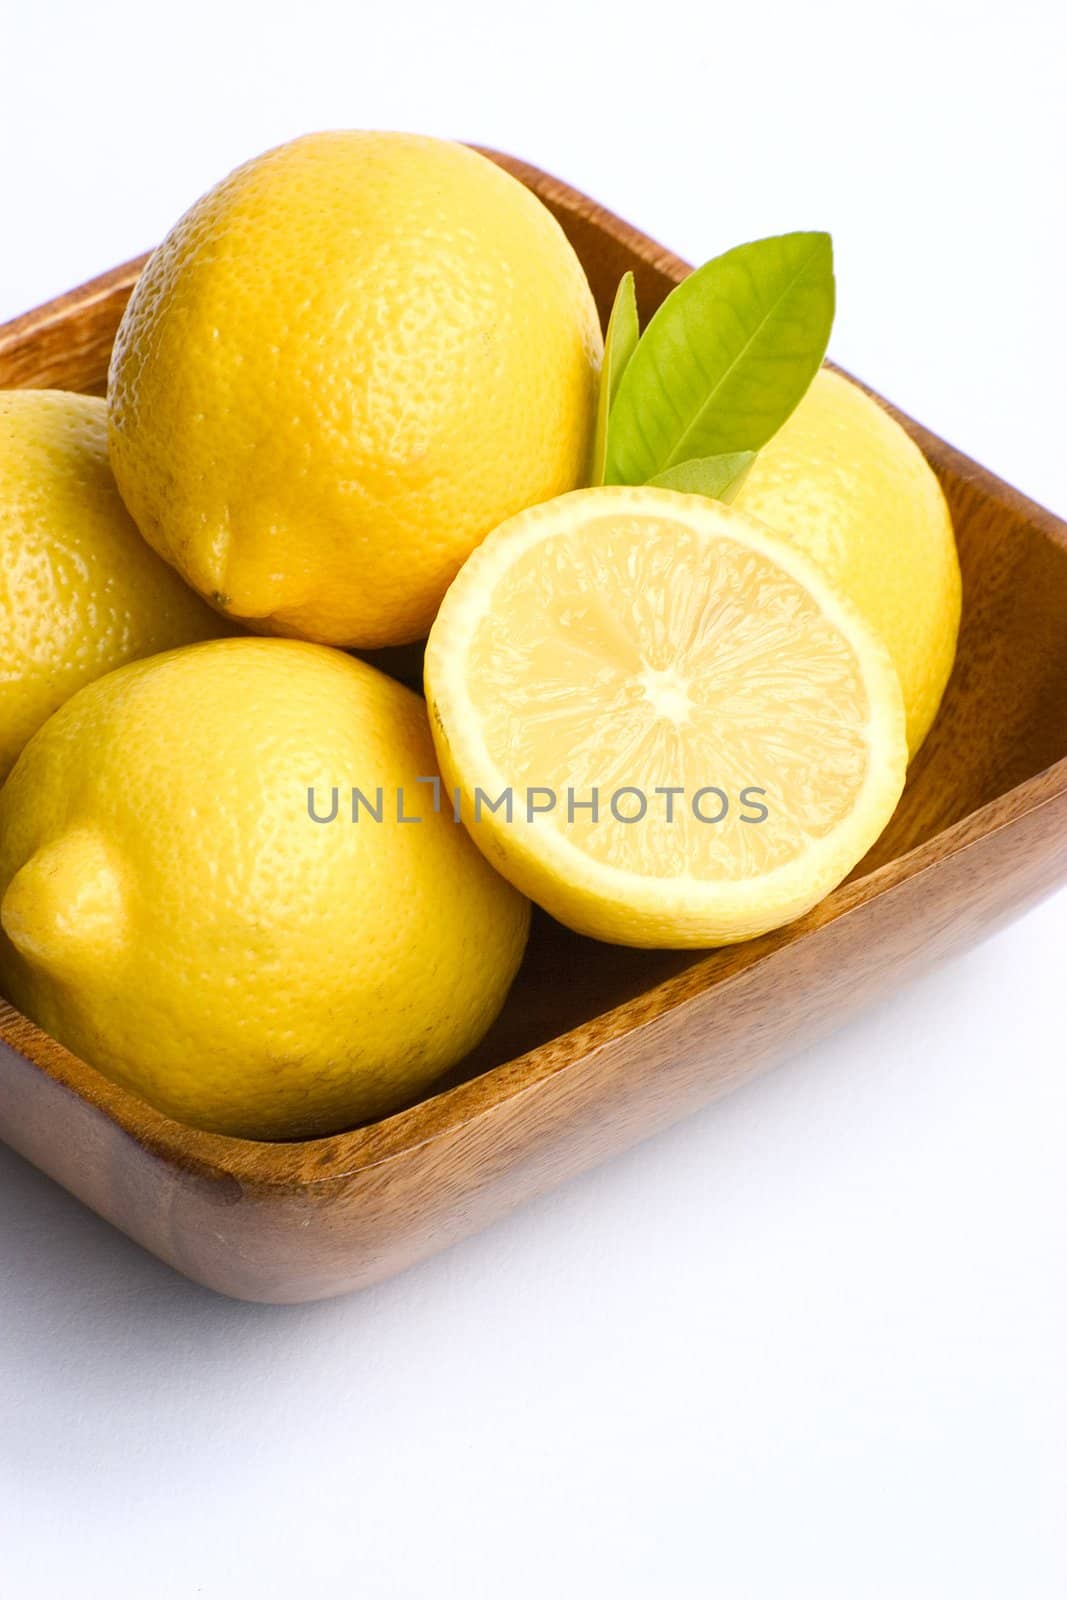 Bowl of lemons. by miradrozdowski